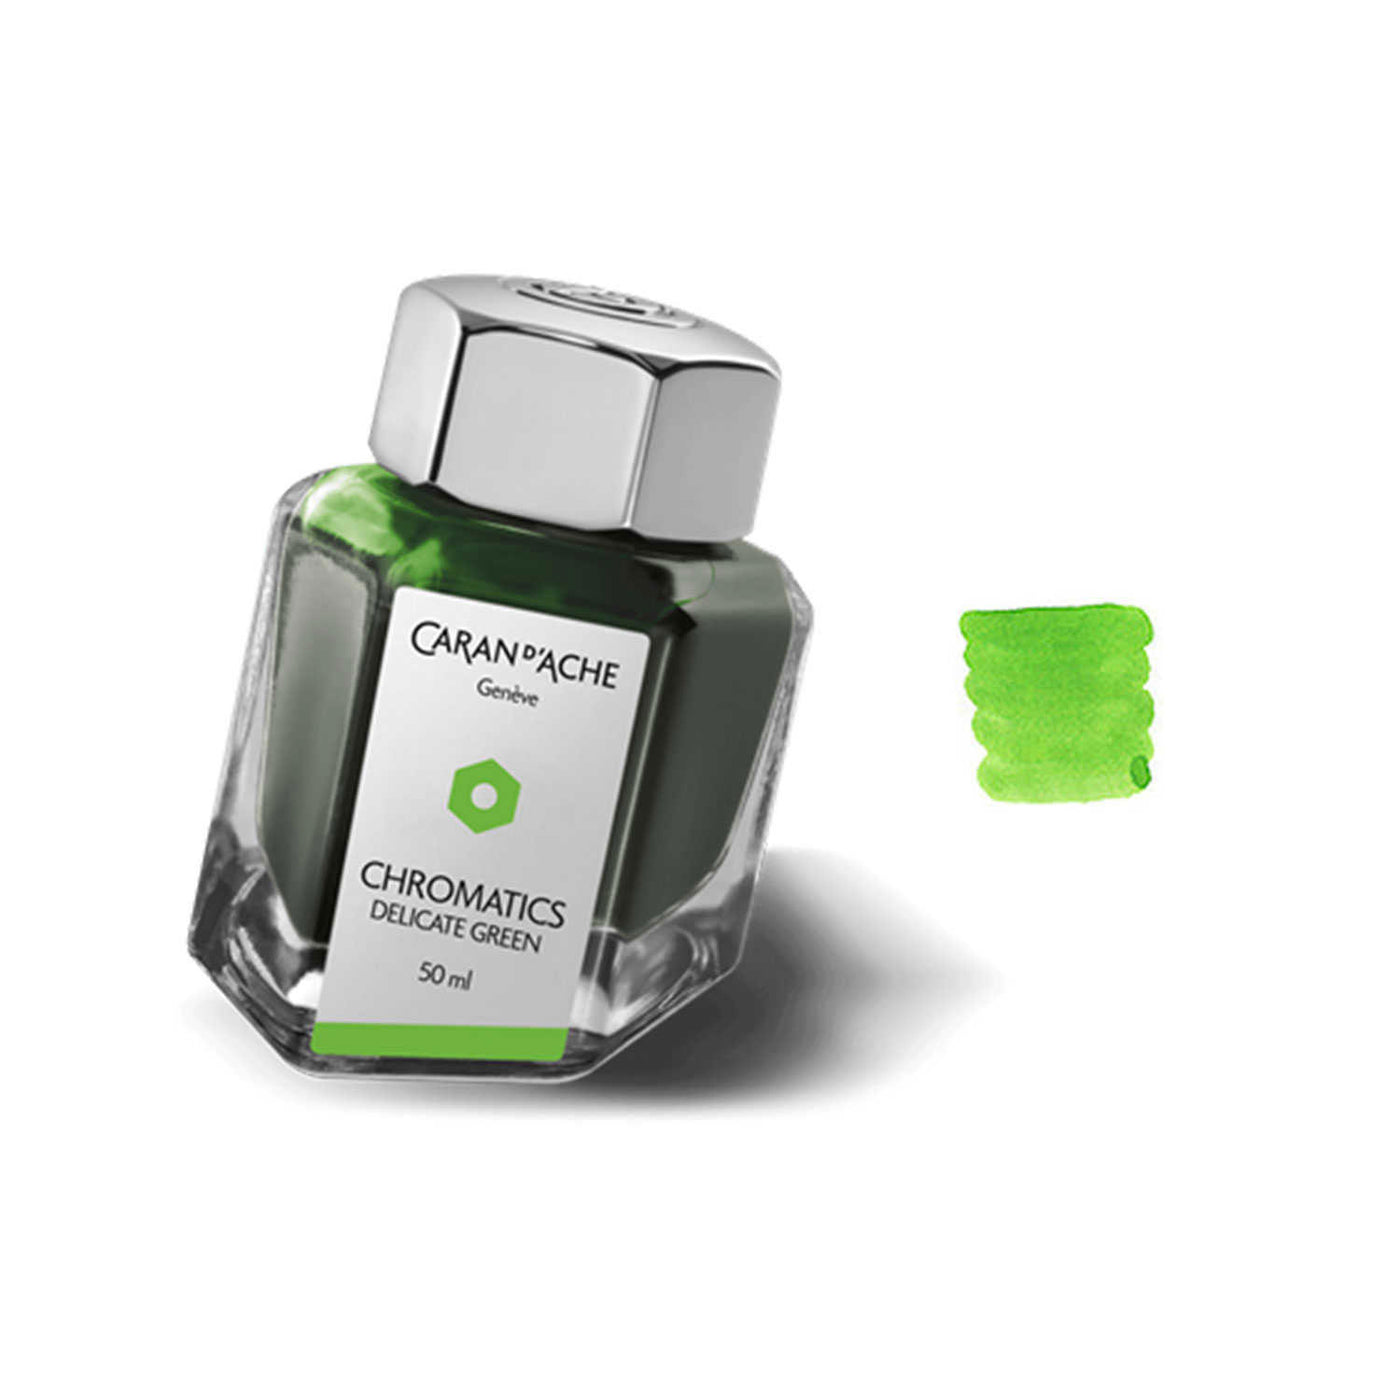 Caran d' Ache Chromatics Ink Bottle Delicate Green - 50ml 2